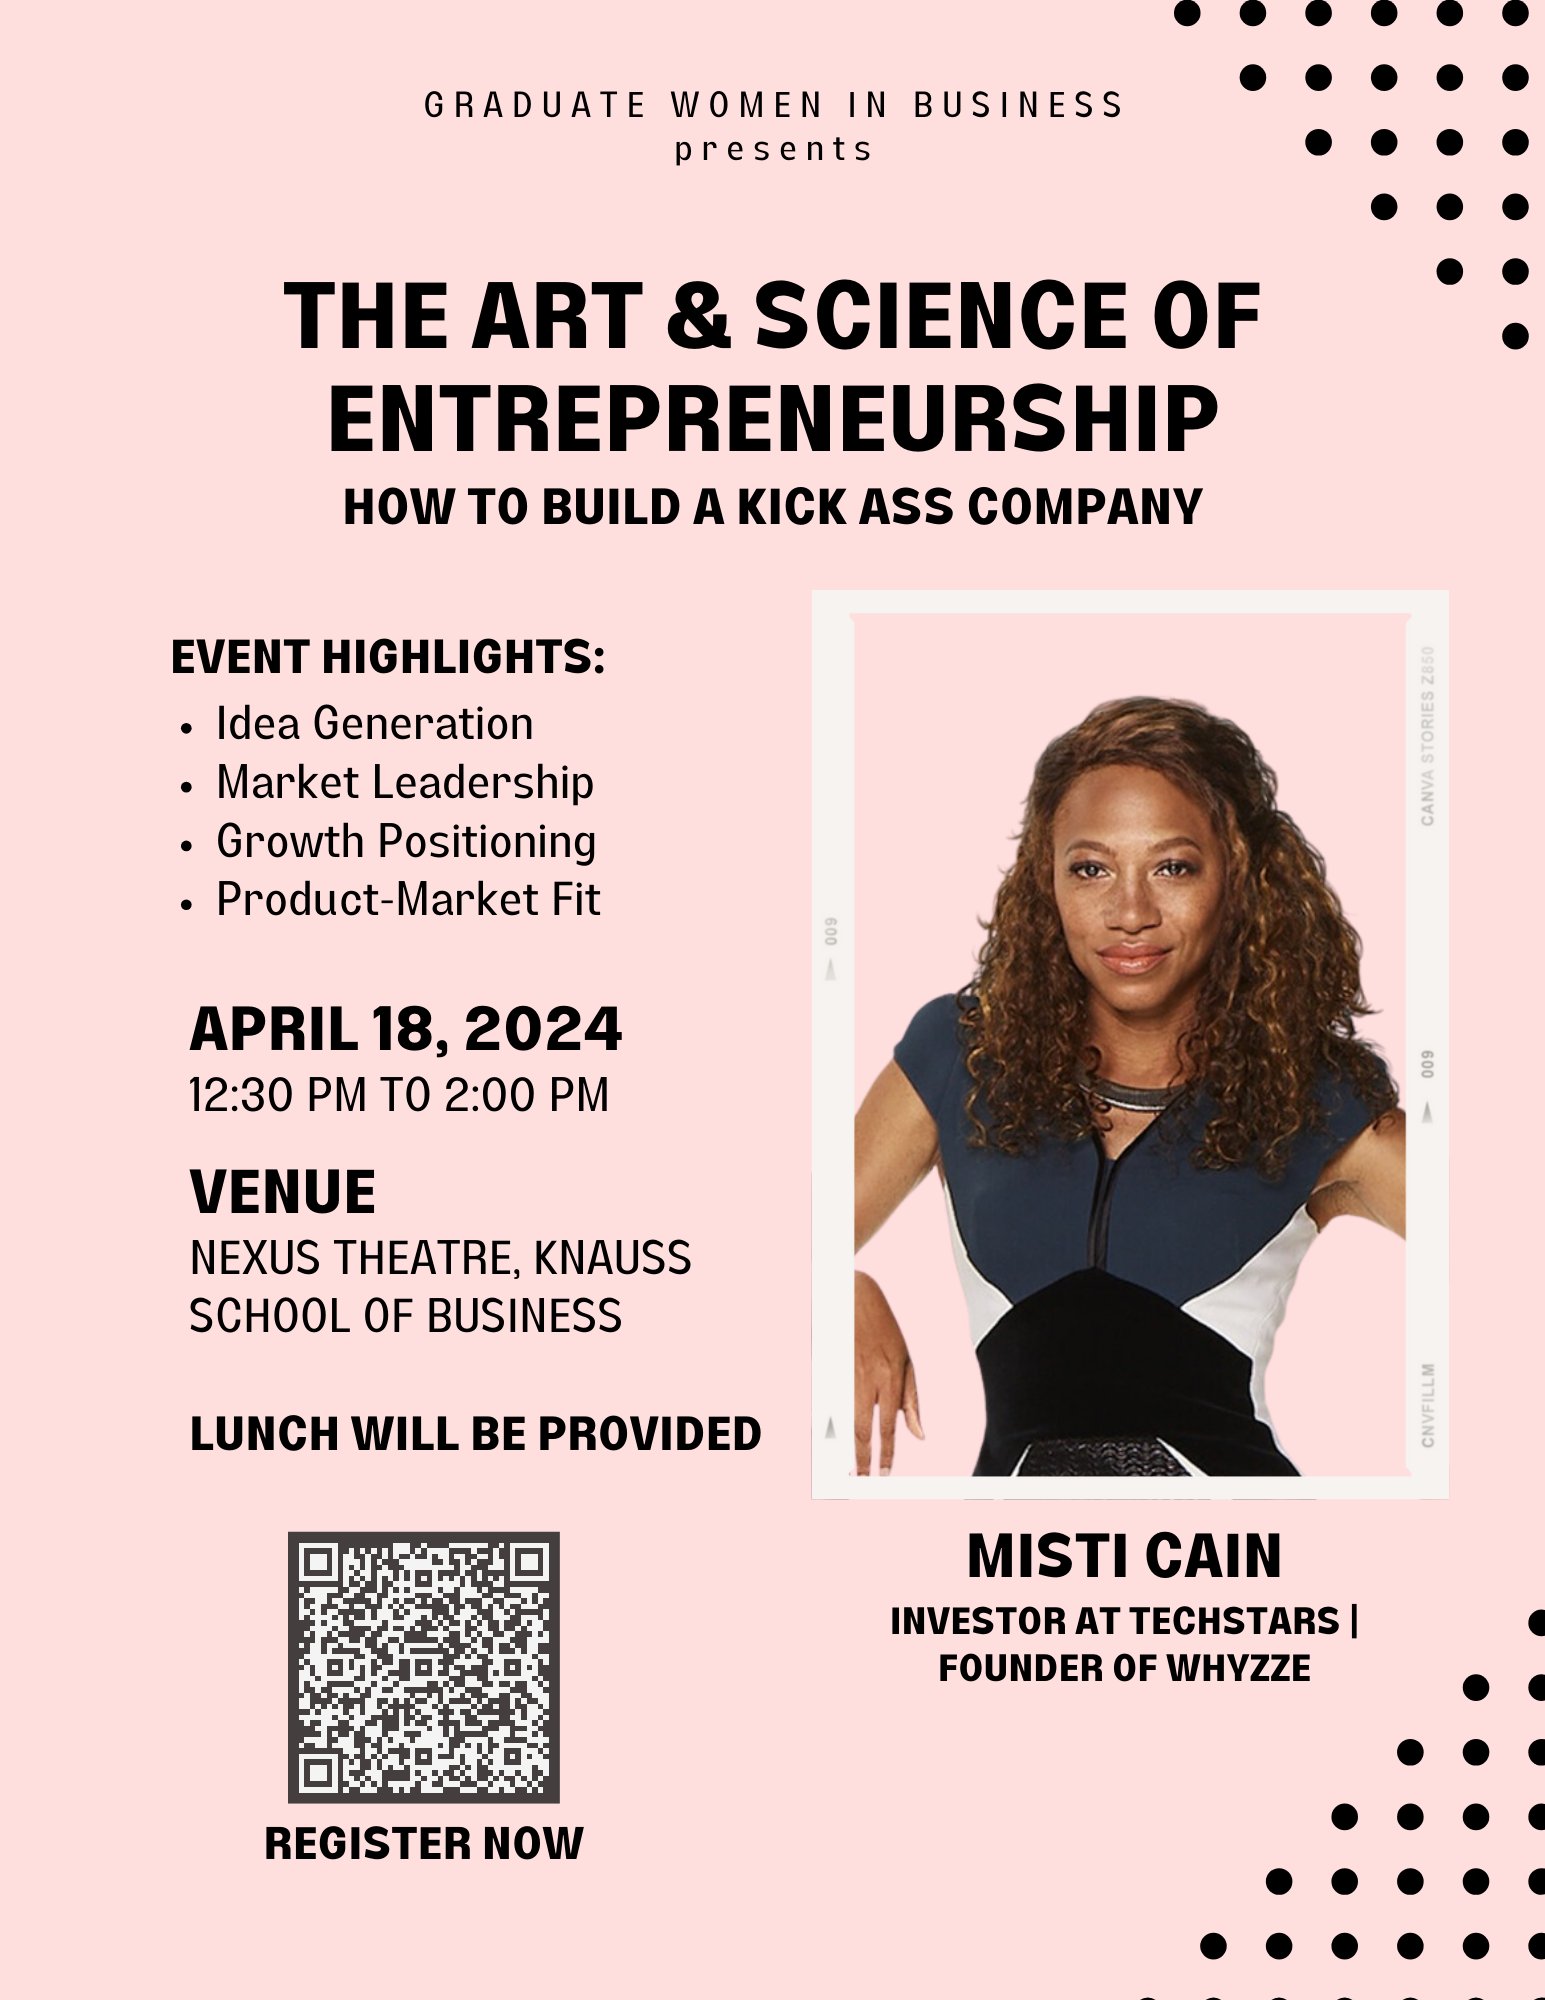 The Art & Science of Entrepreneurship: How to Build a Kick-Ass Company" featuring Misti Cain